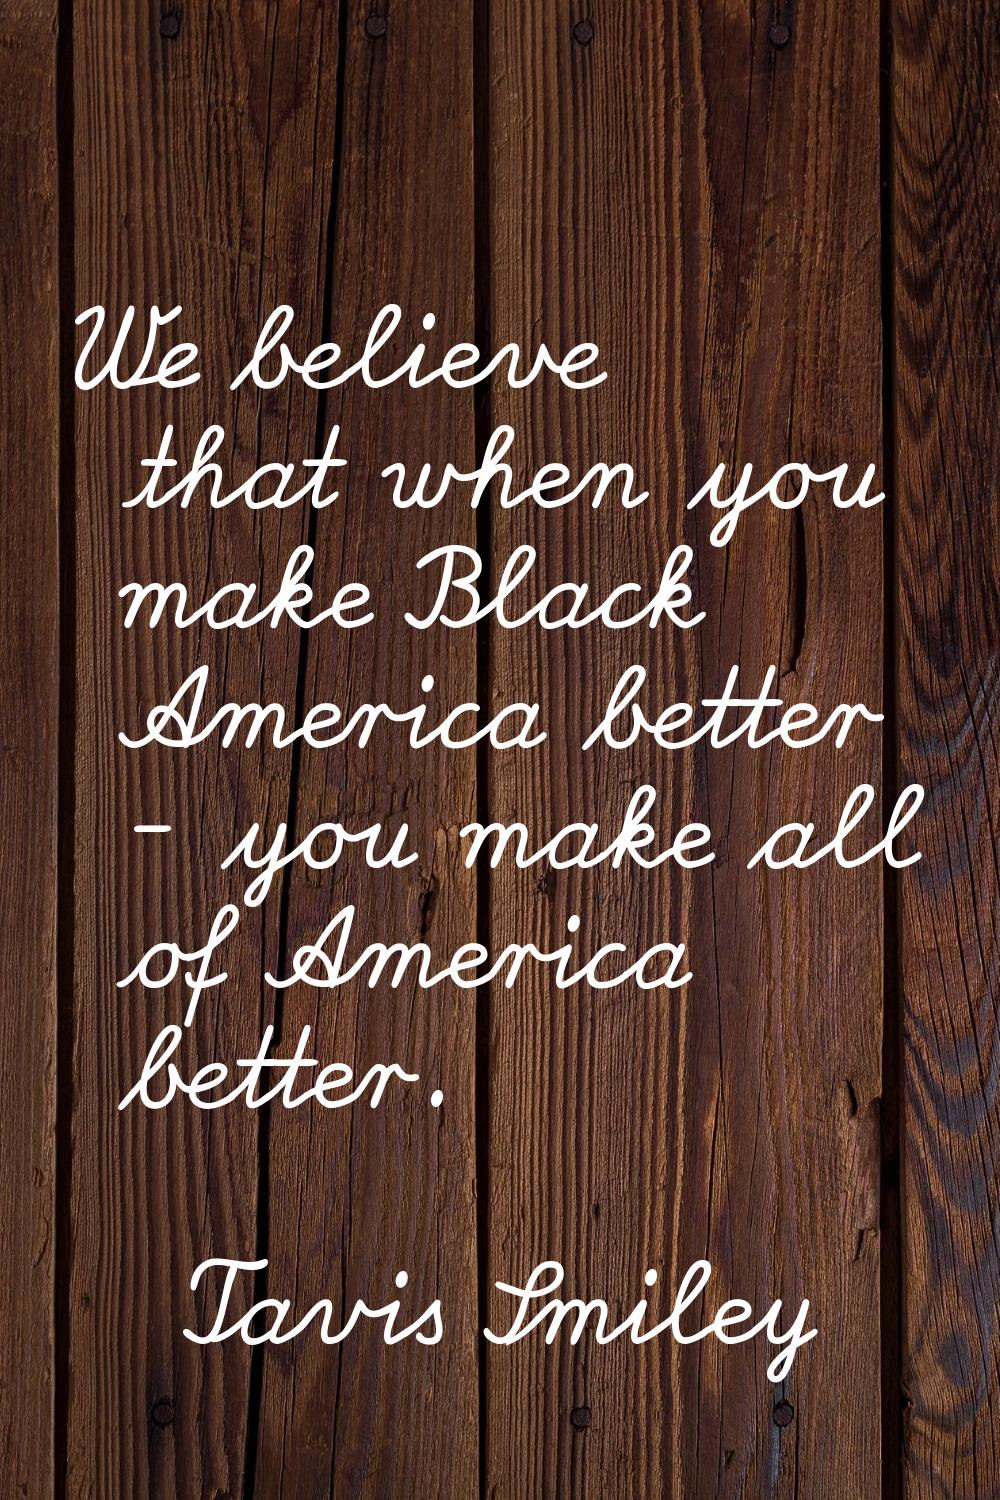 We believe that when you make Black America better - you make all of America better.